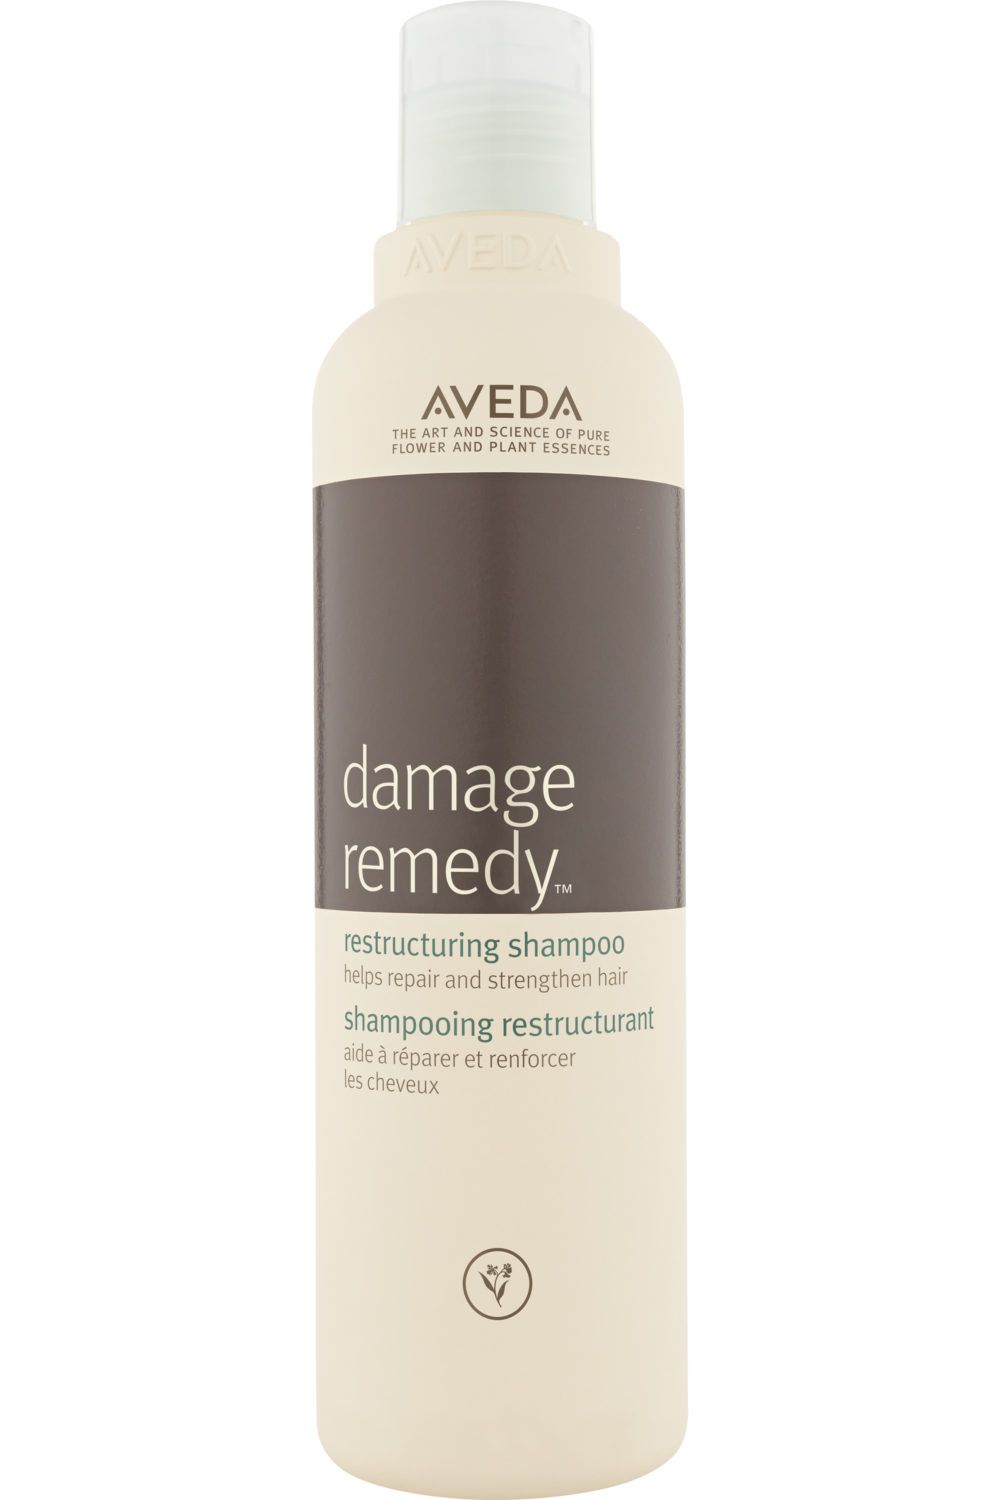 Aveda - Damage Remedy ™ Shampoo Restructuring